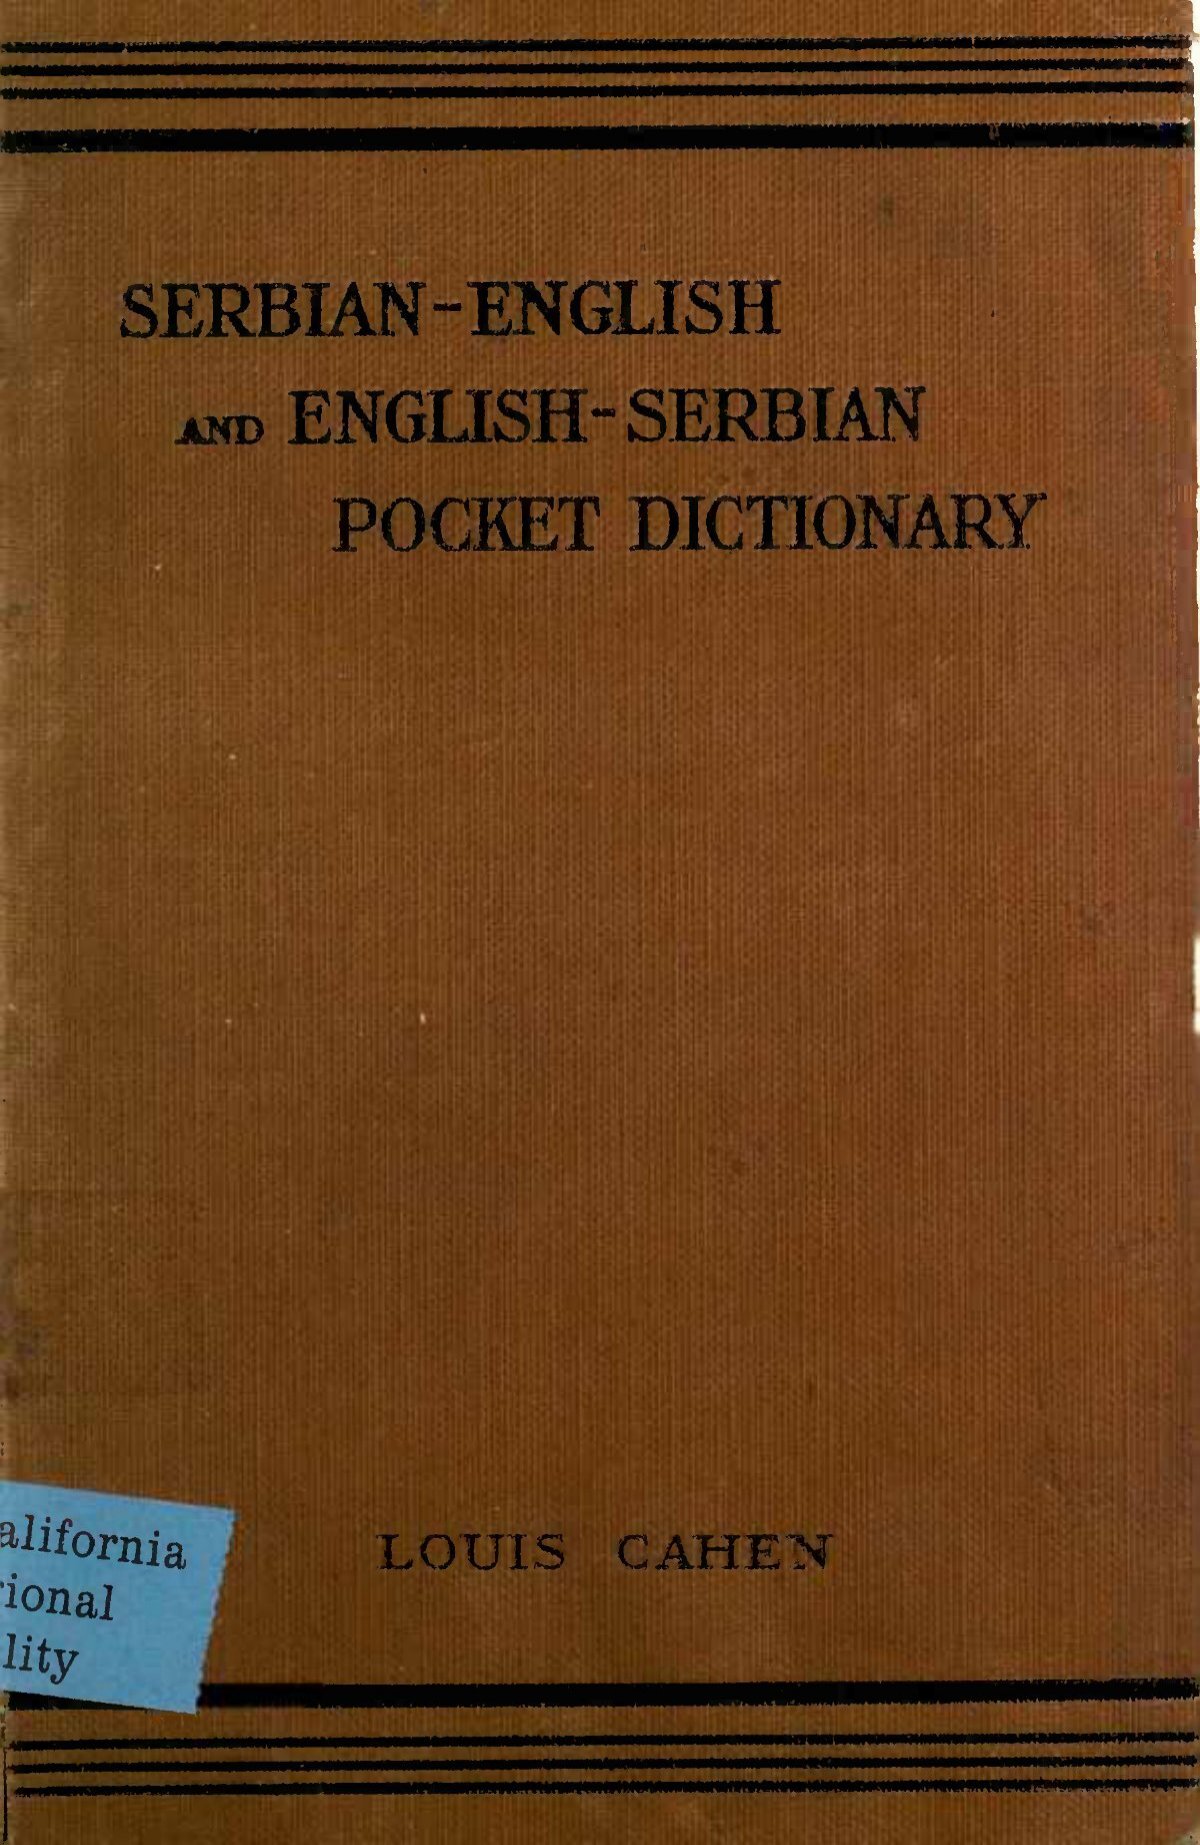 SERBIAN-ENGLISH